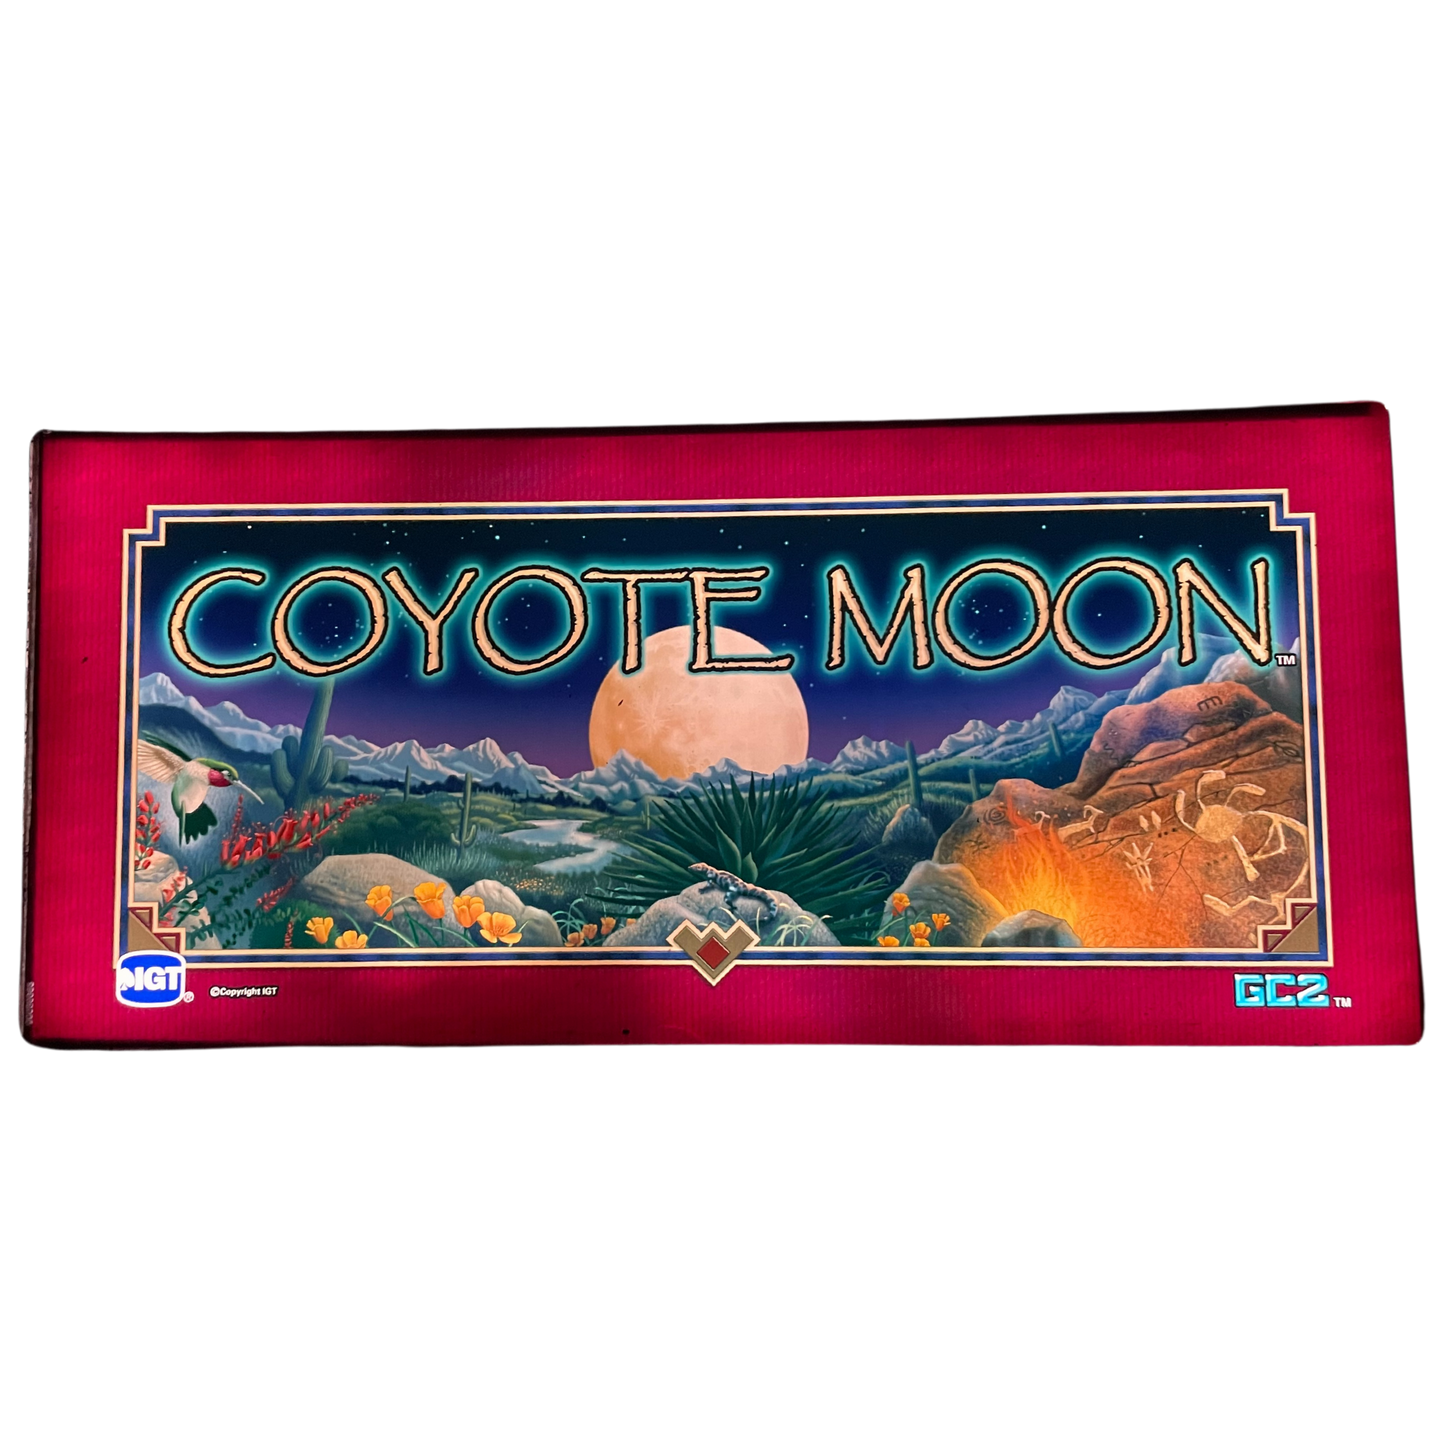 Coyote Moon Slot Glass